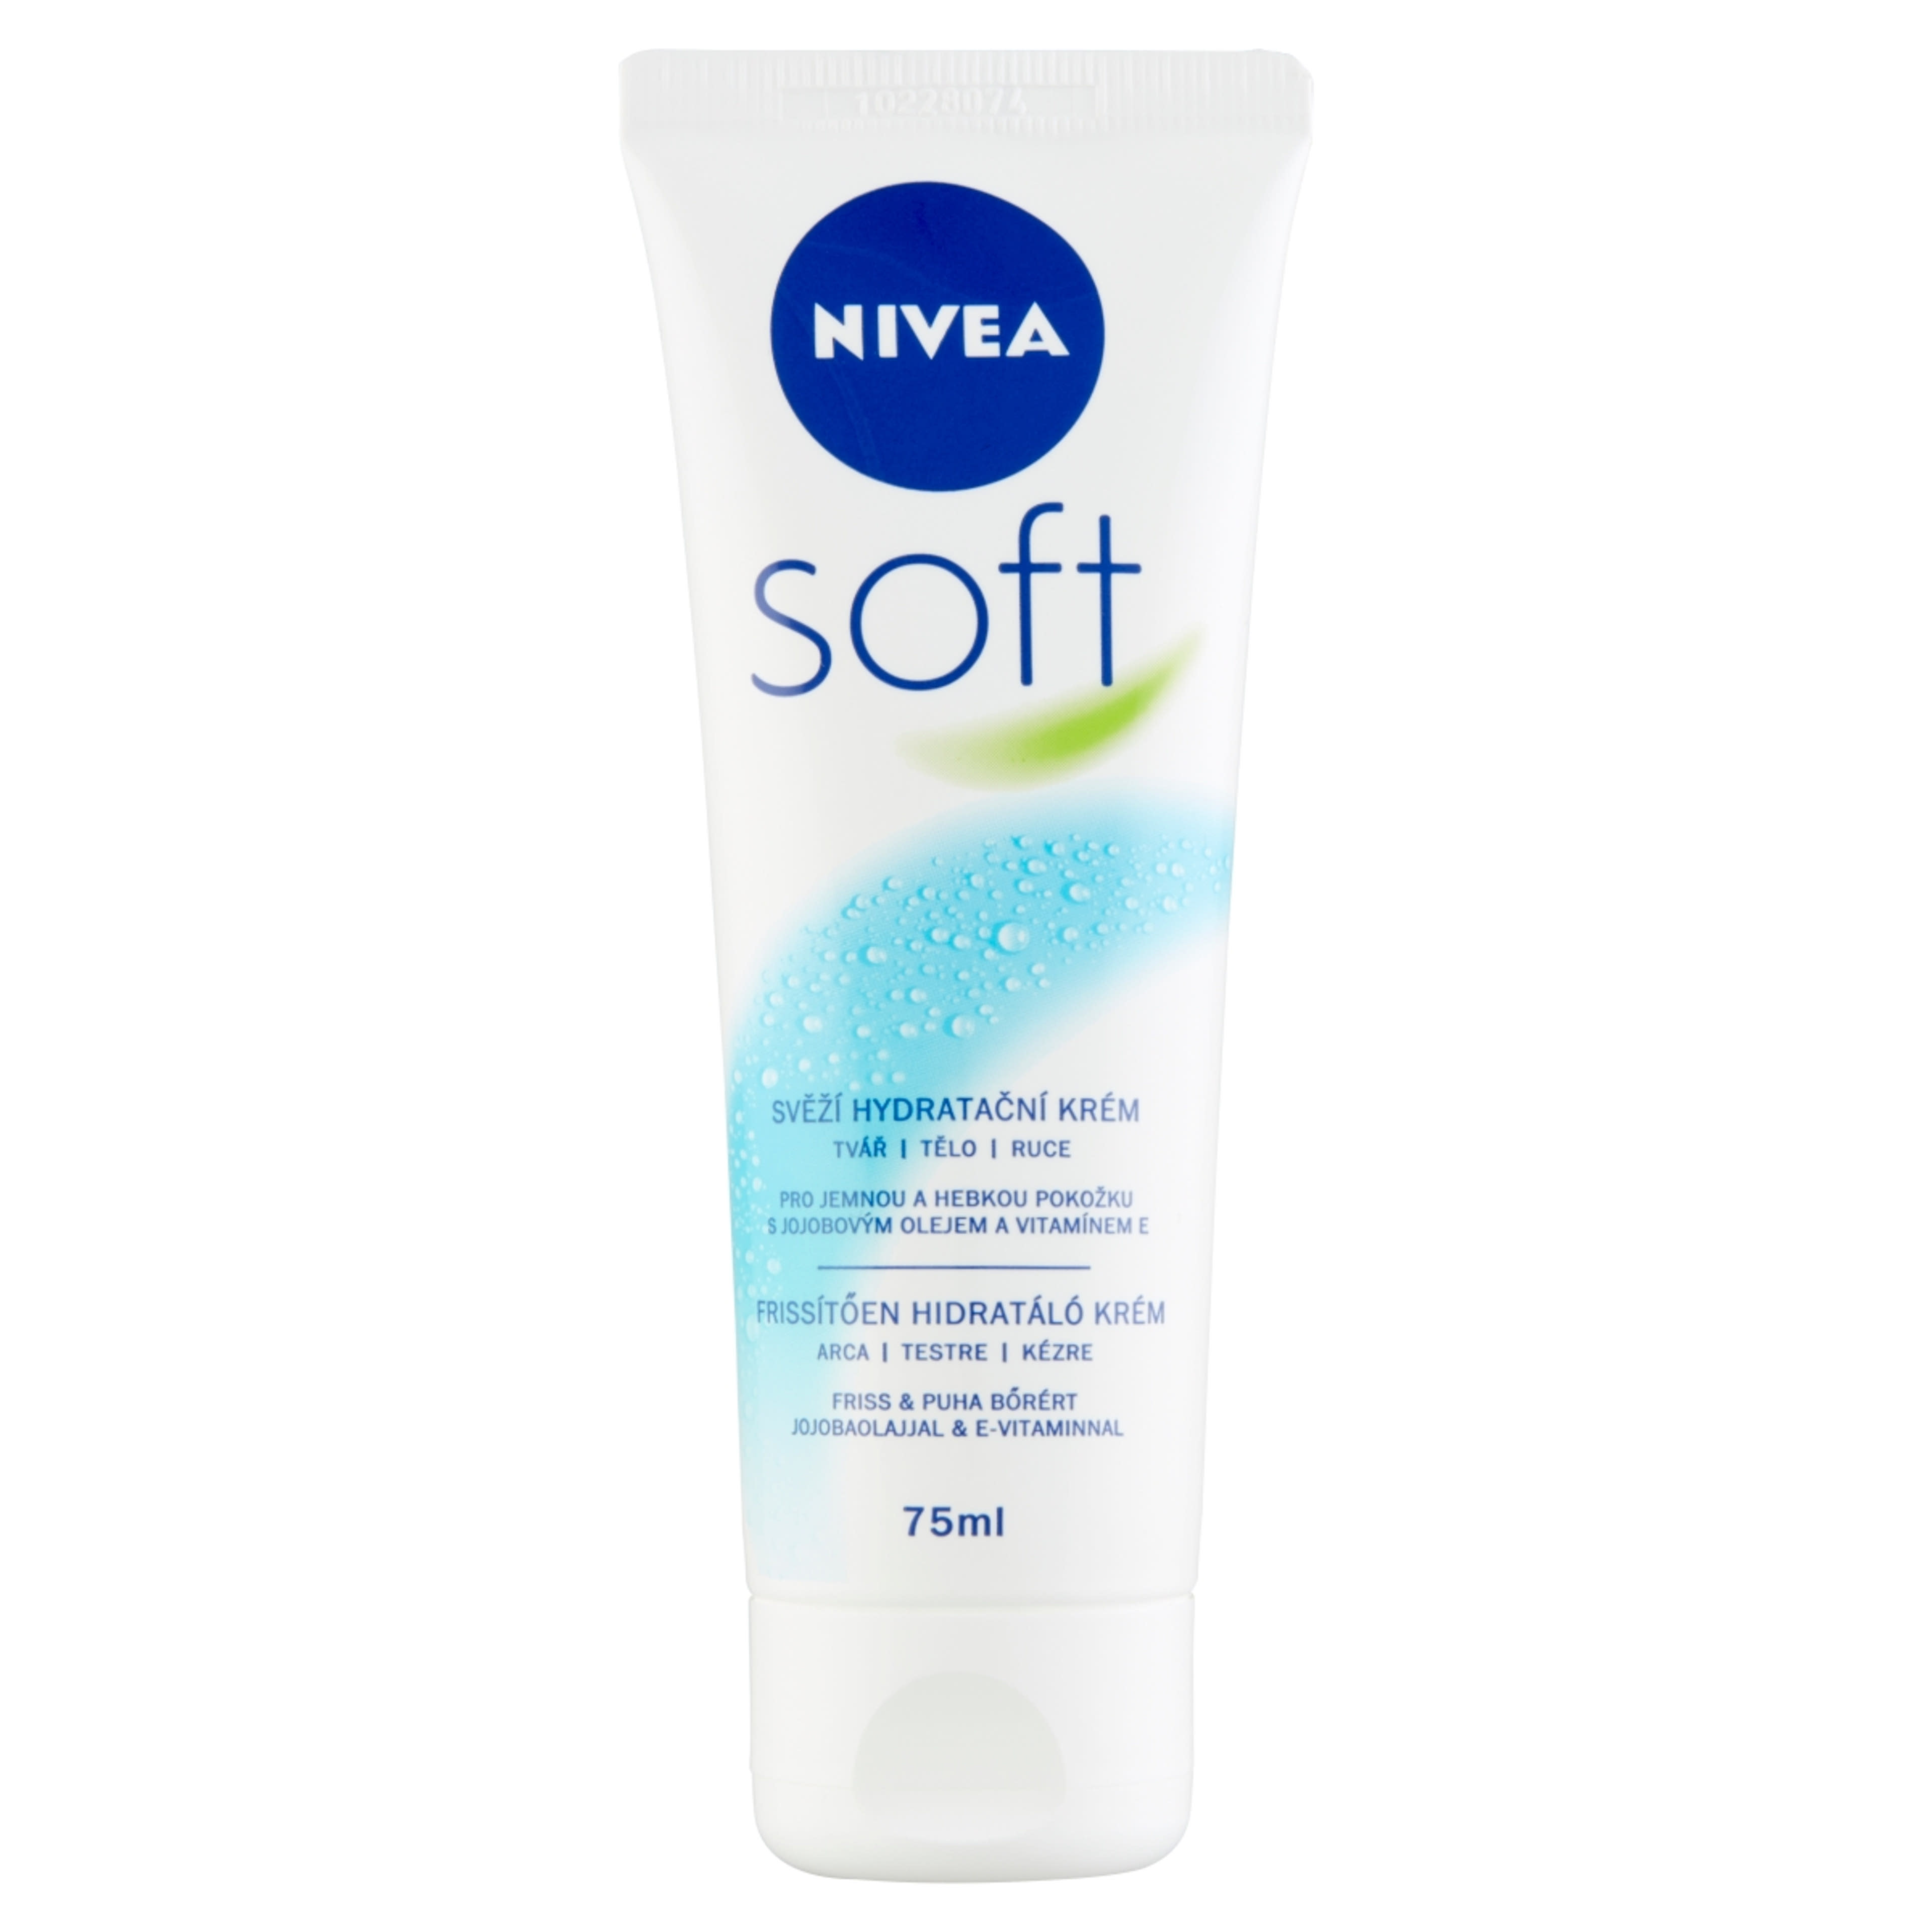 NIVEA Soft - 75 ml-1